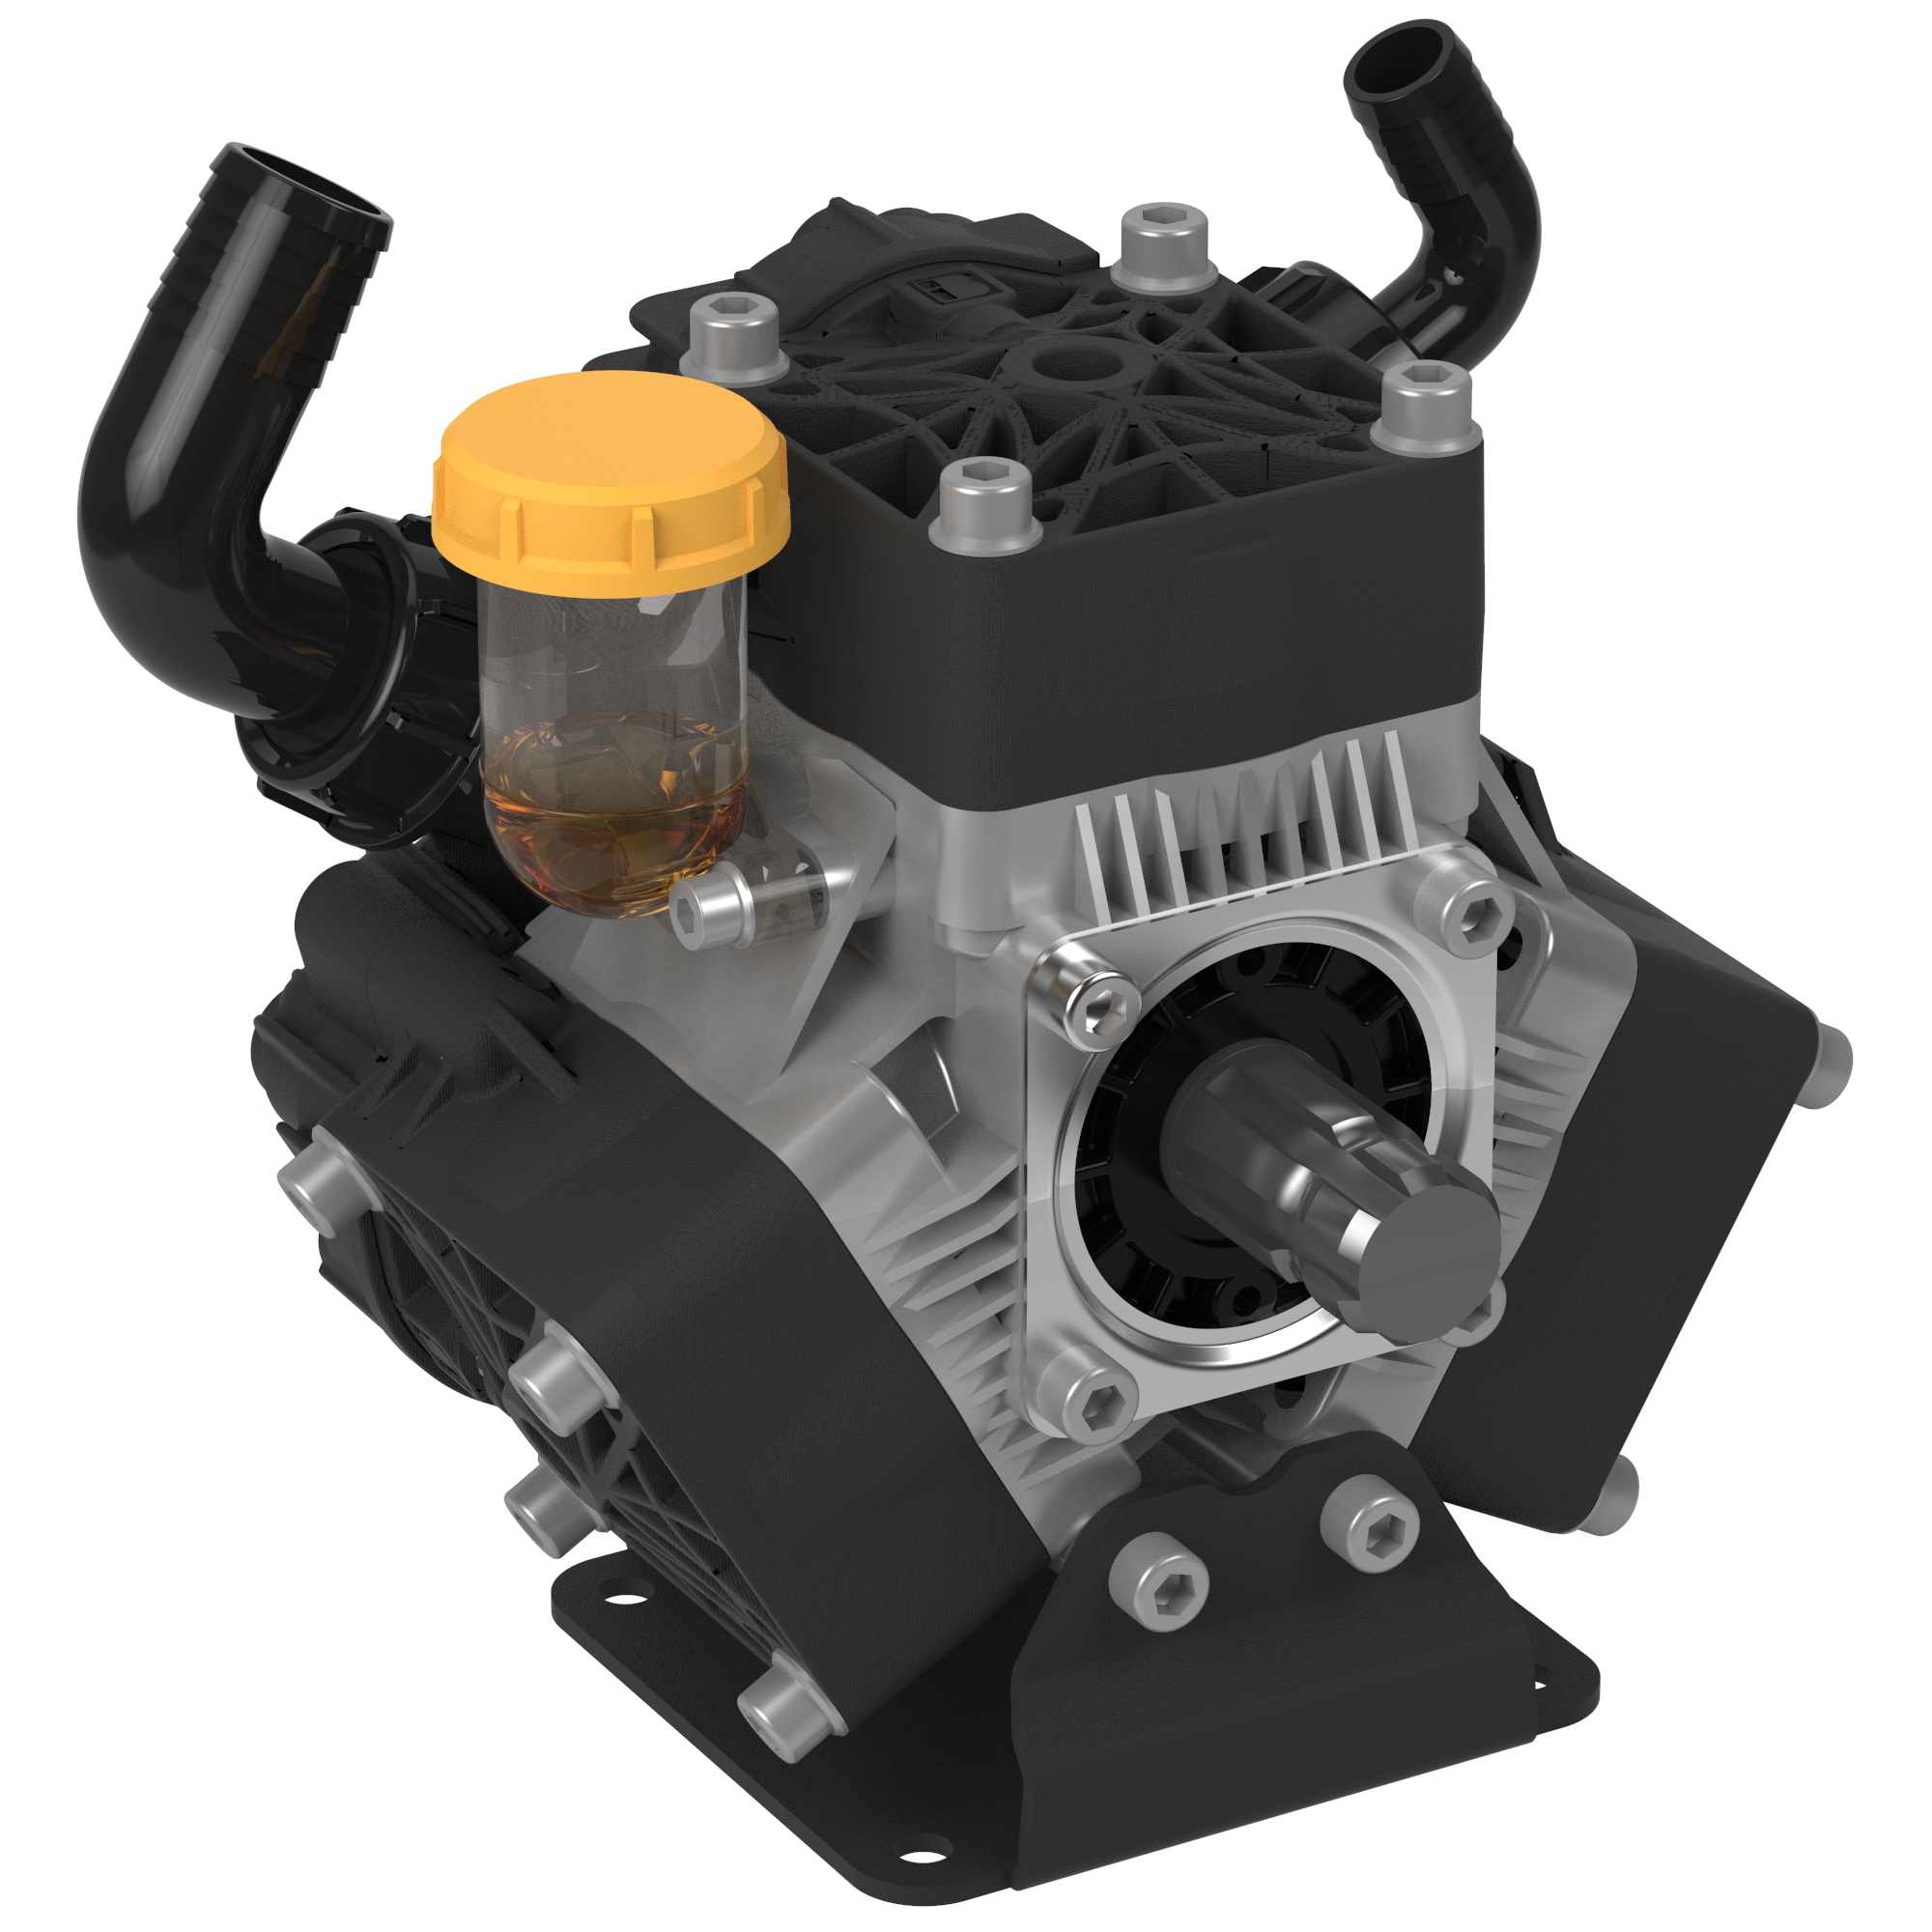 Pentair Hypro 9915系列低压隔膜泵”>
                <div class=